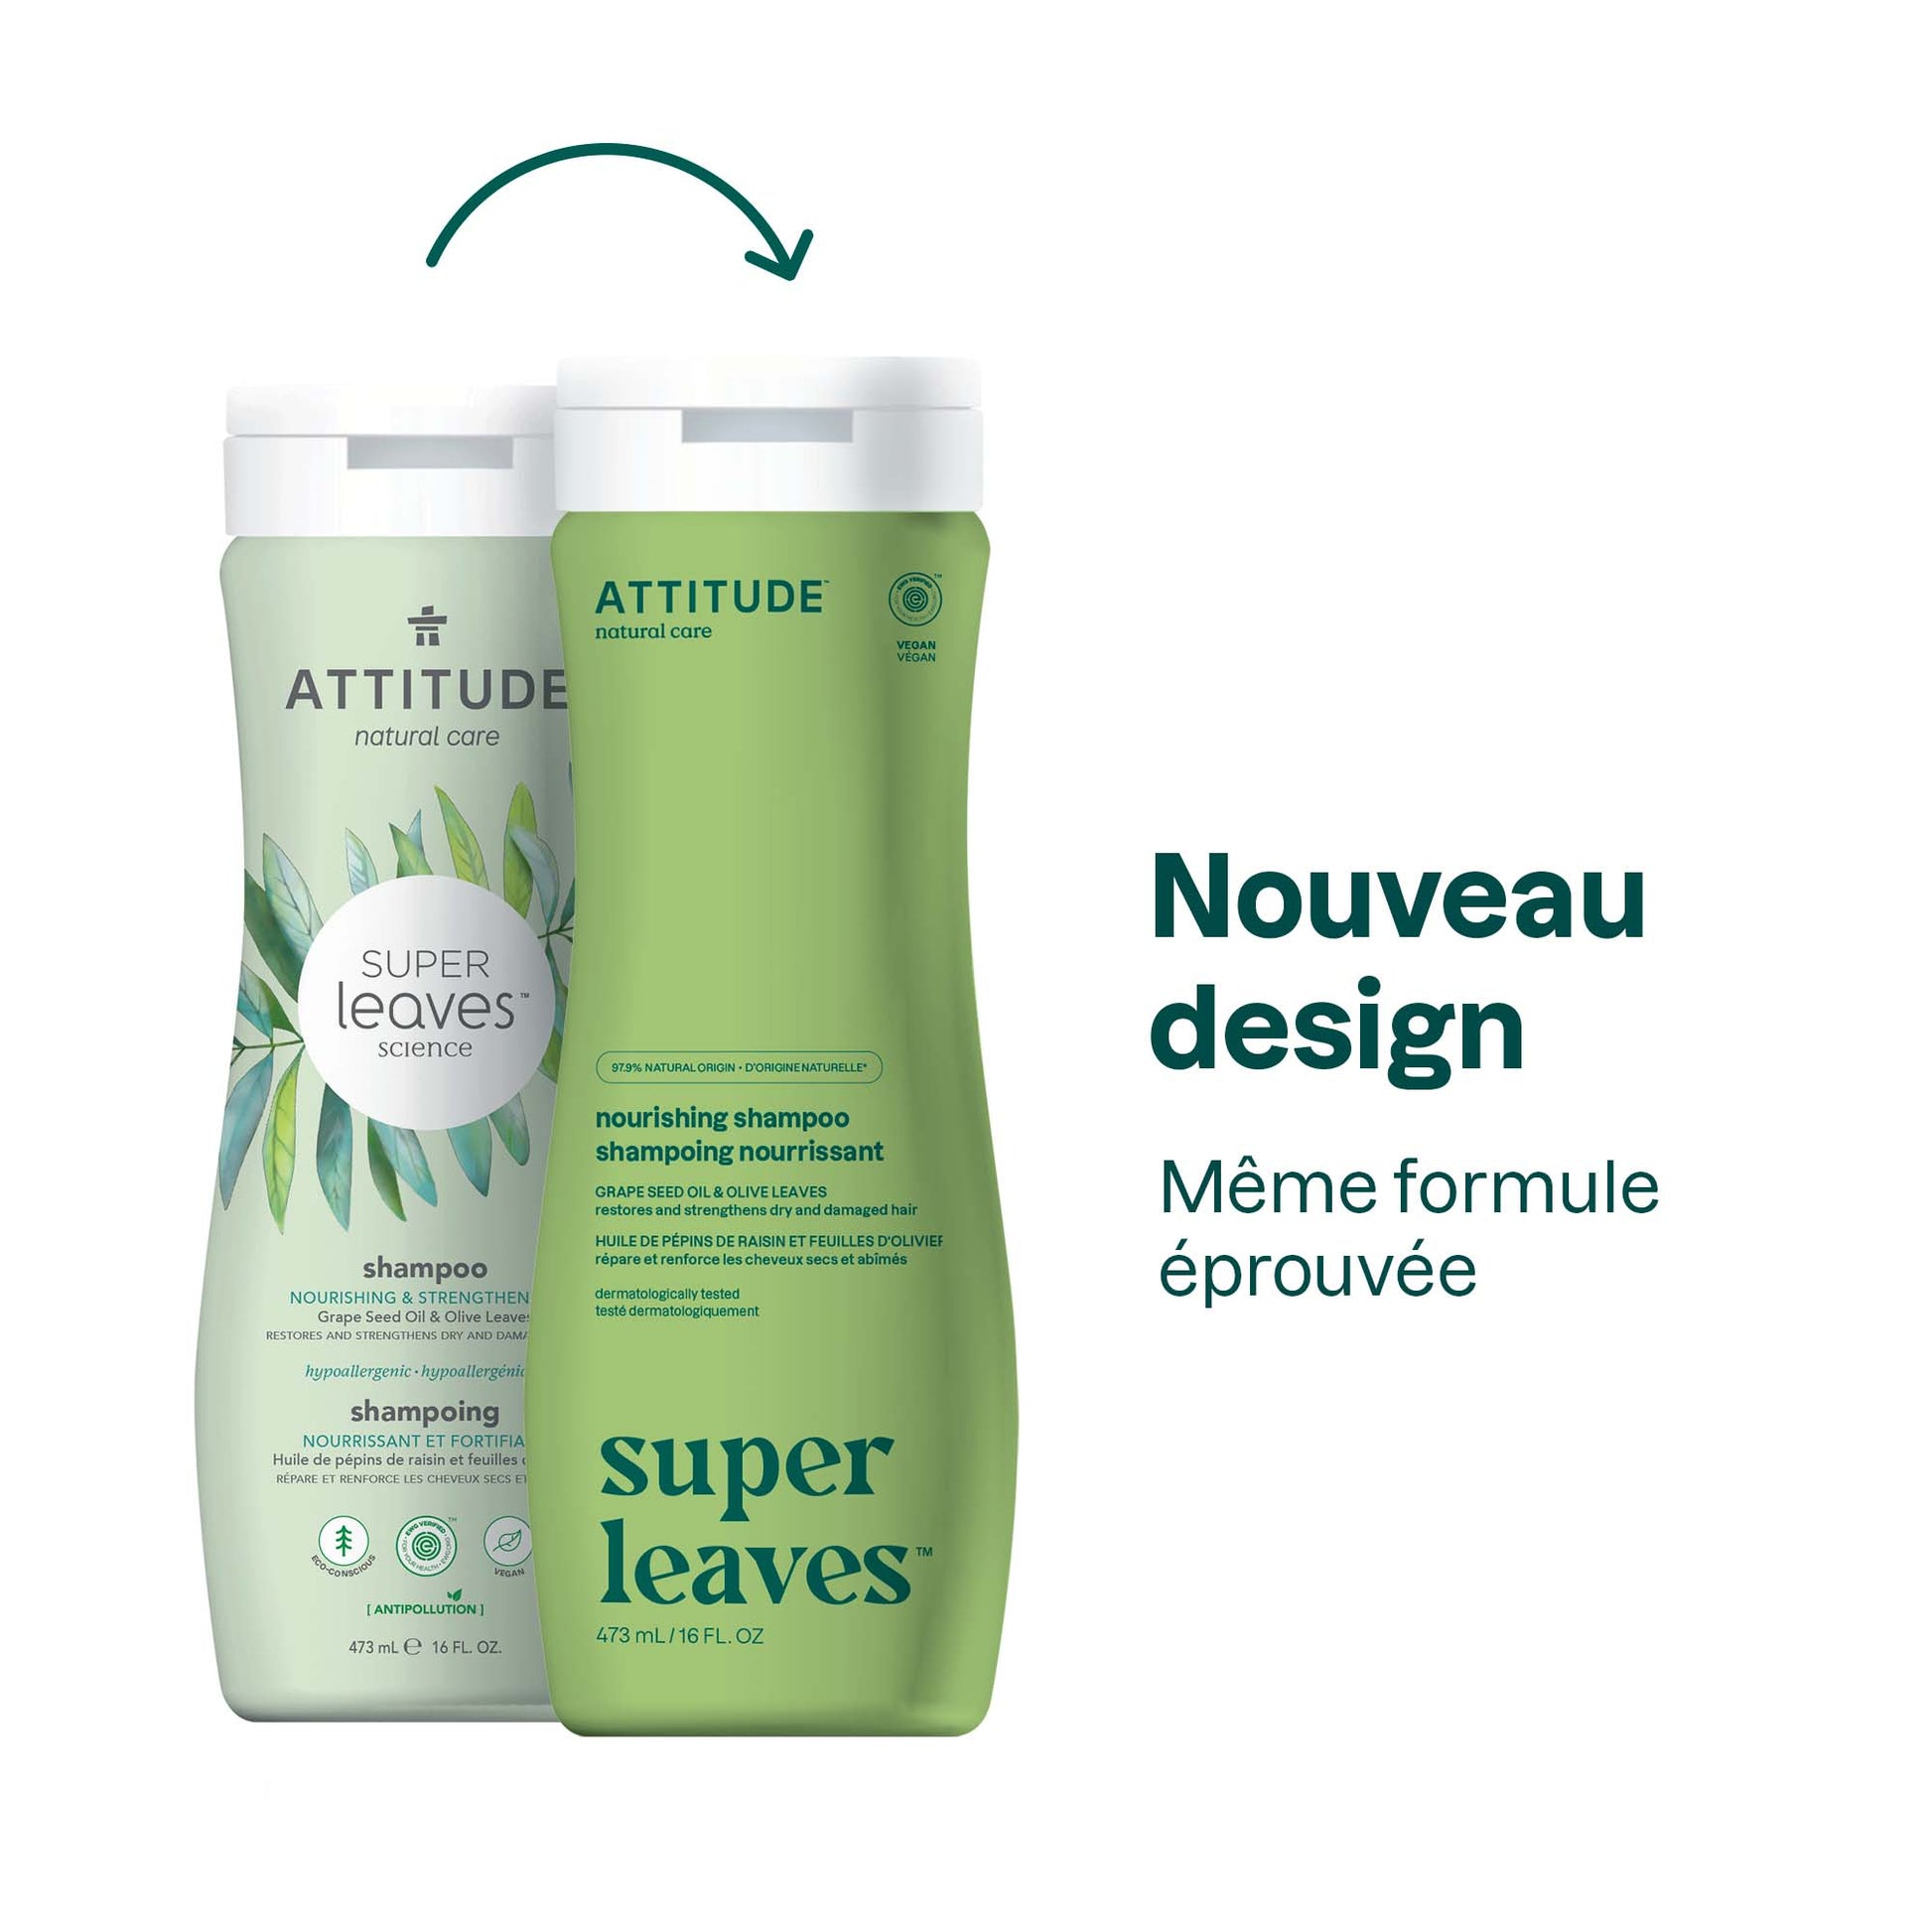 ATTITUDE Super leaves™ Shampoo Nourishing & Strengthening Restores and strengthens dry and damaged hair 11093_en? 16 FL. OZ.